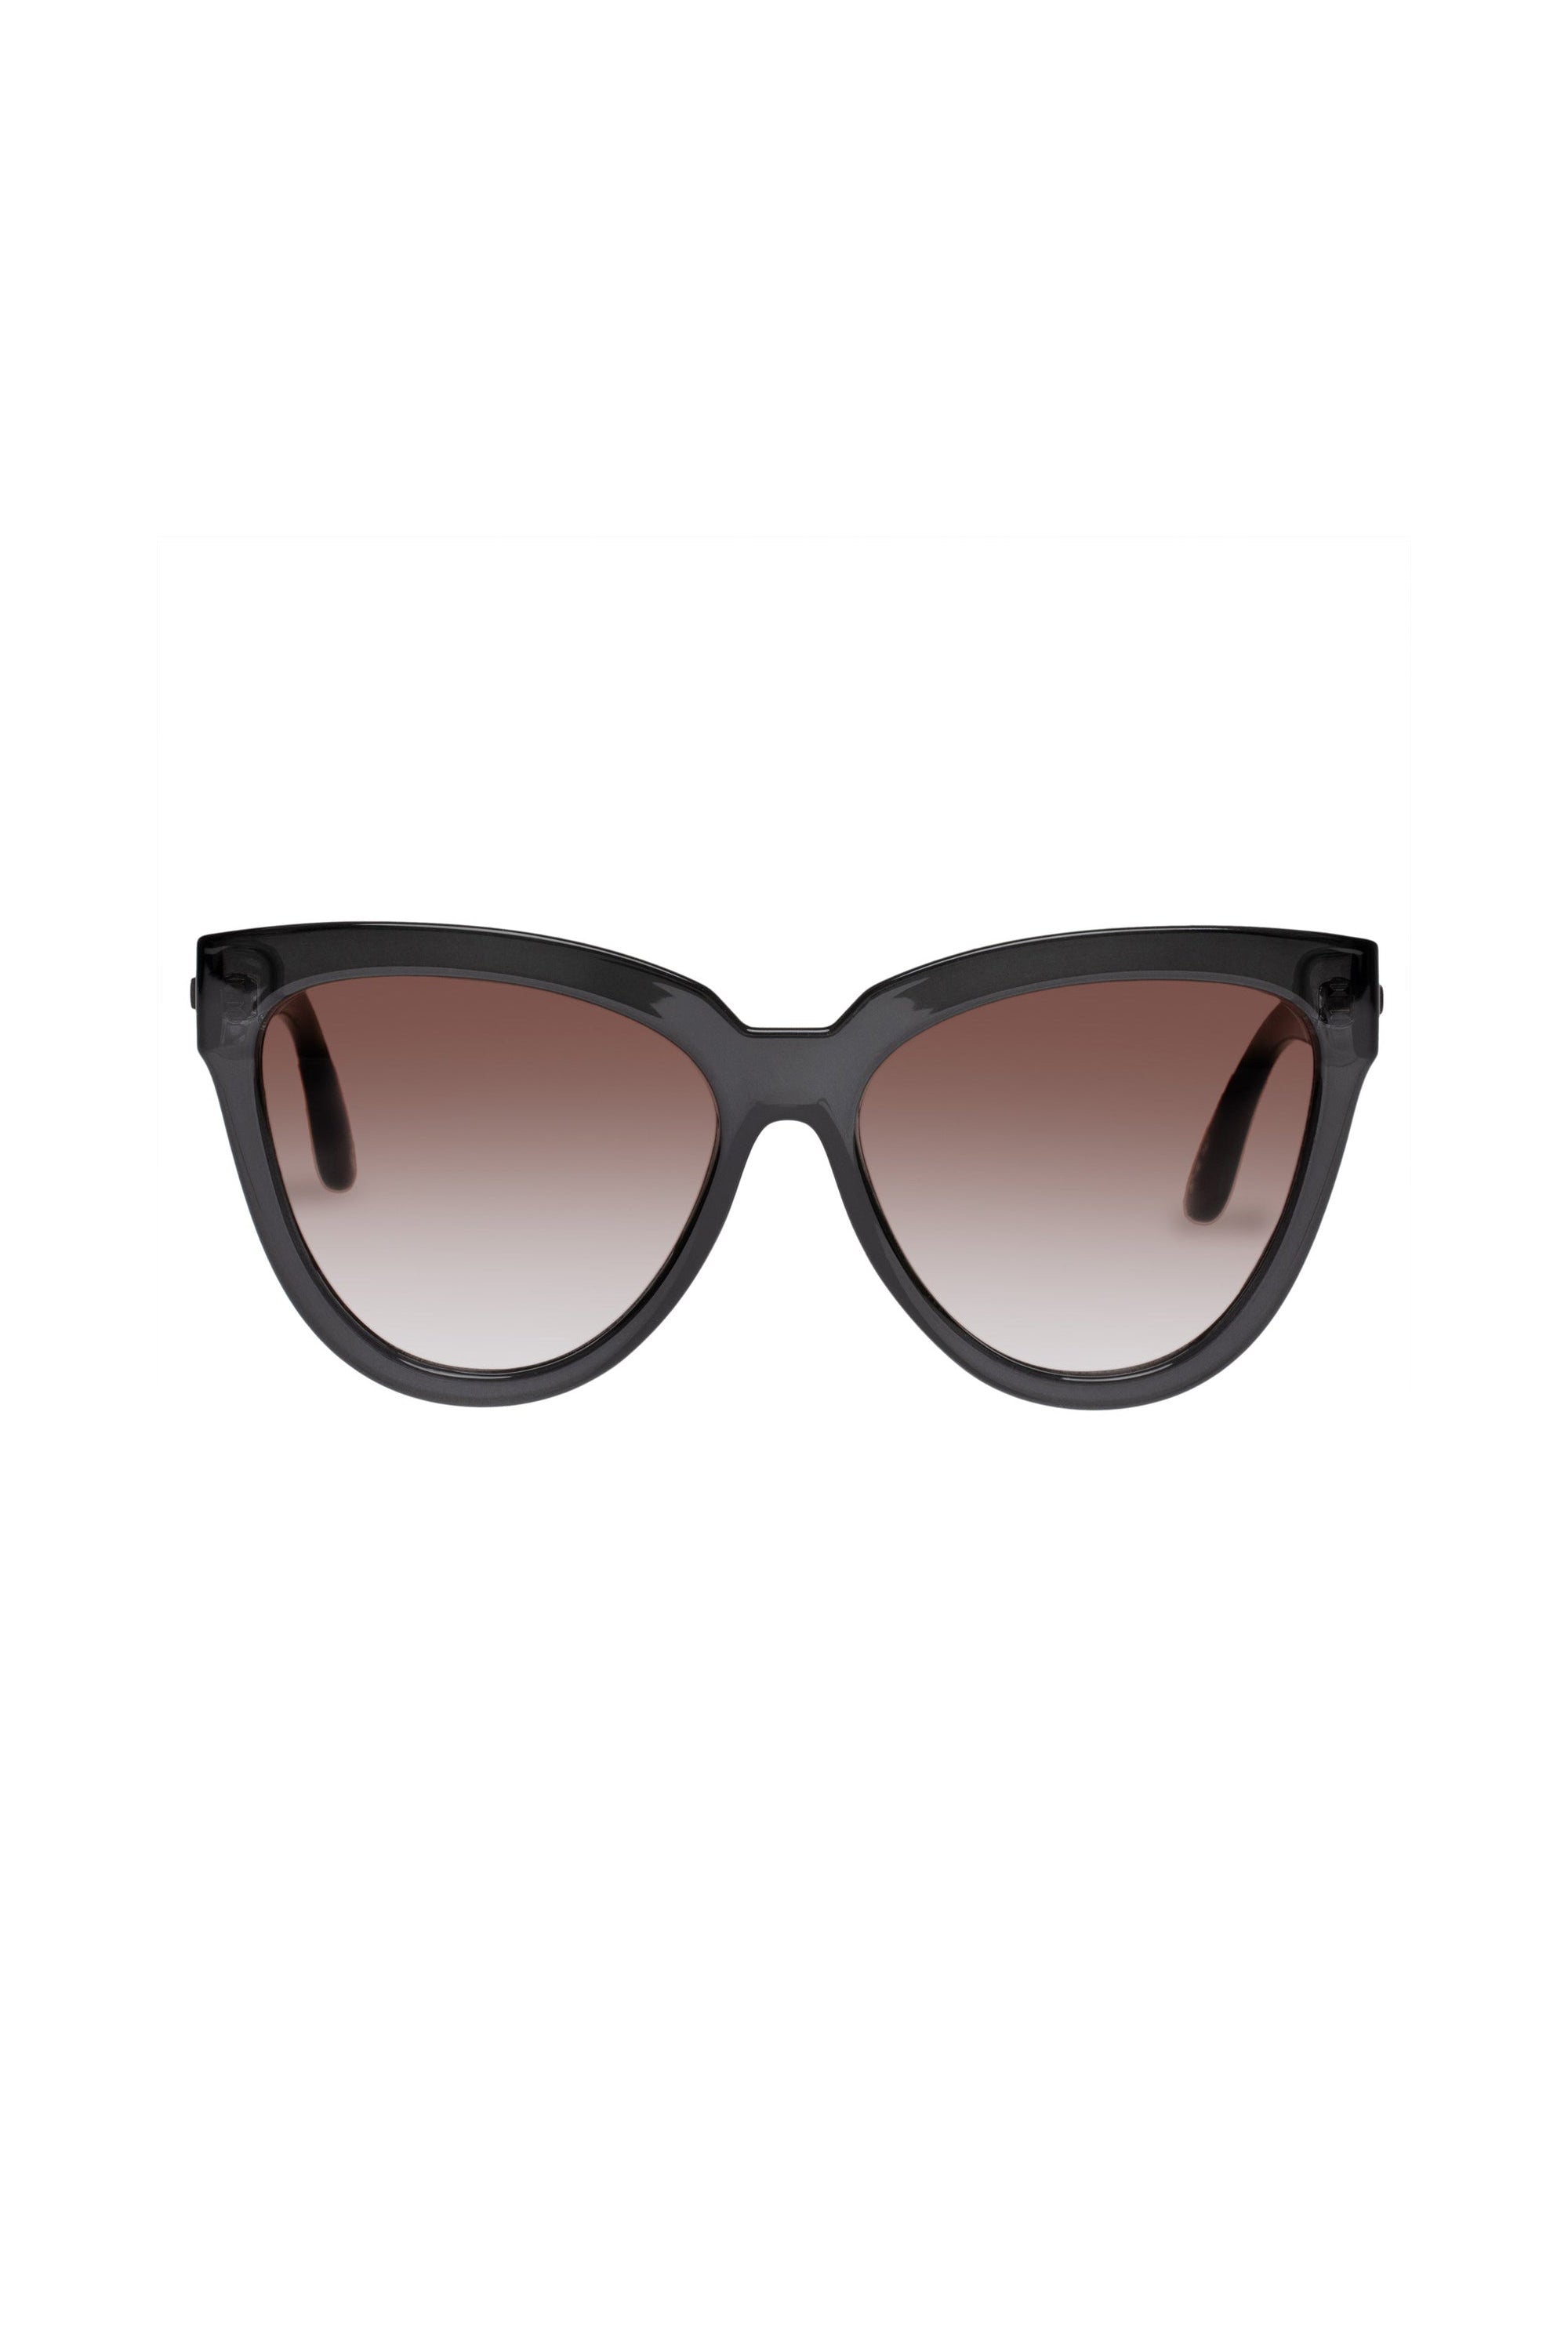 Le Specs Liar Lair Sunglasses - Charcoal - RUM Amsterdam